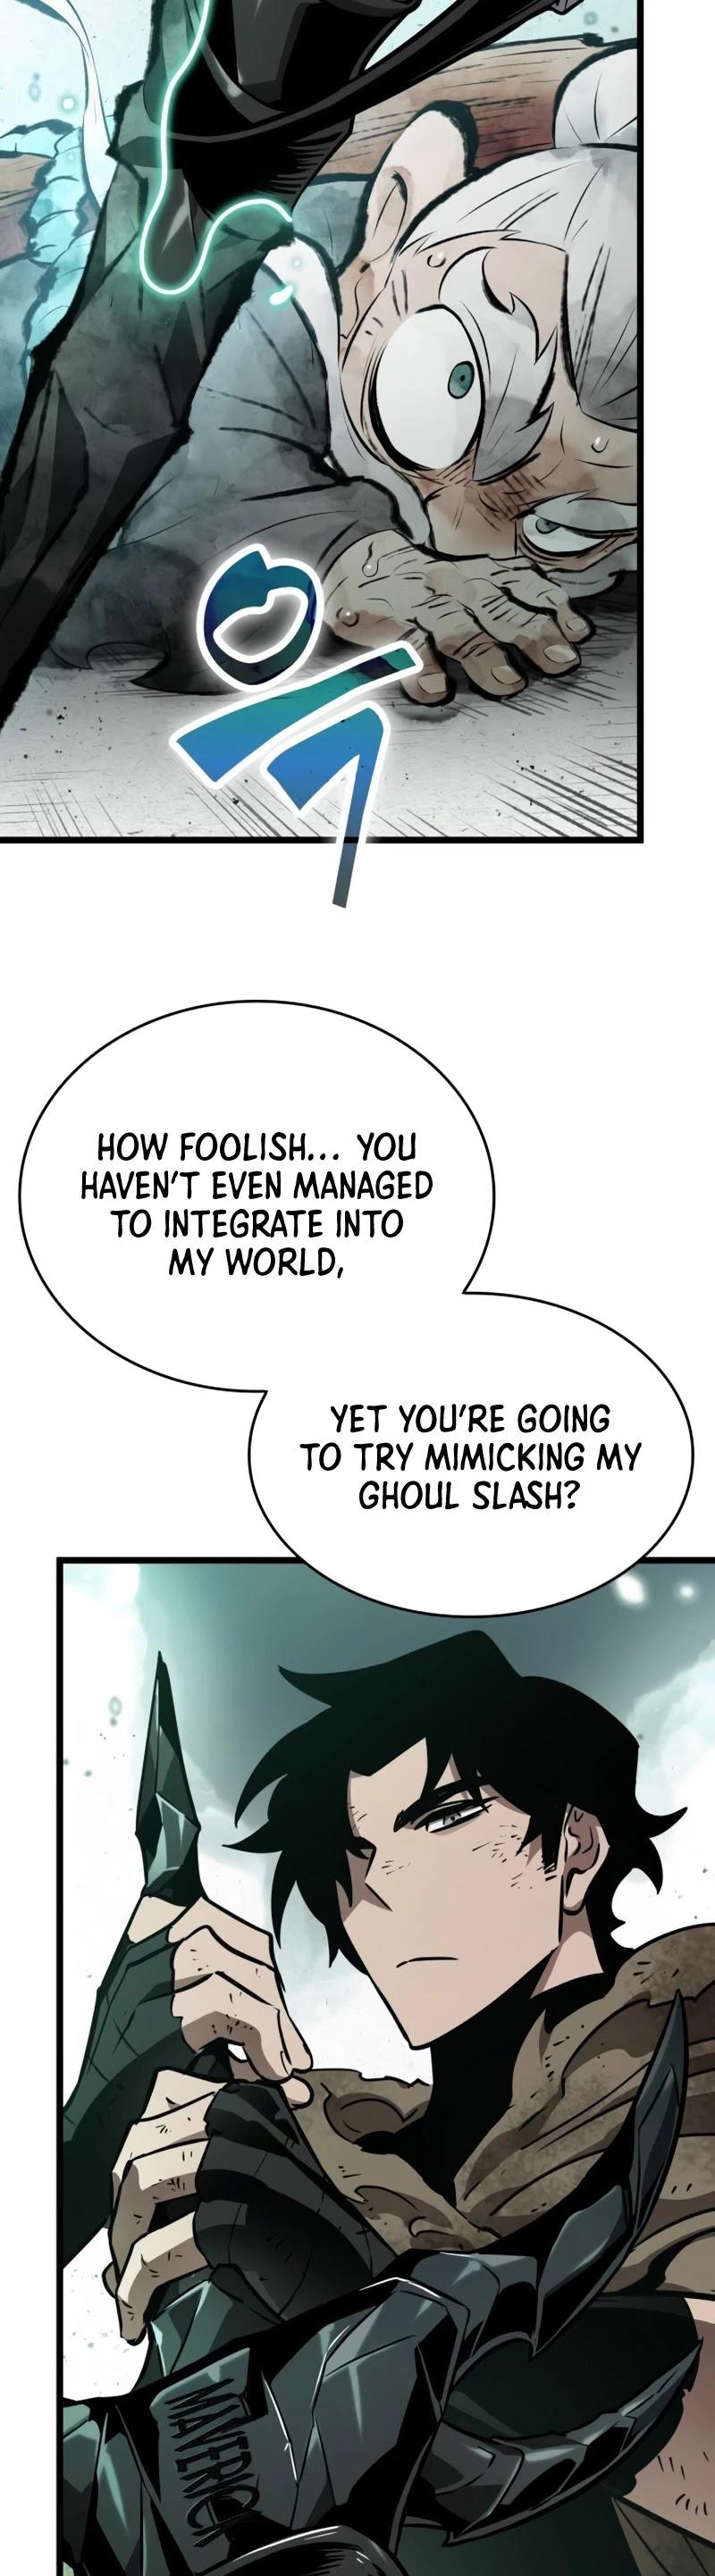 The World After The Fall Chapter 22 page 12 - Mangakakalot